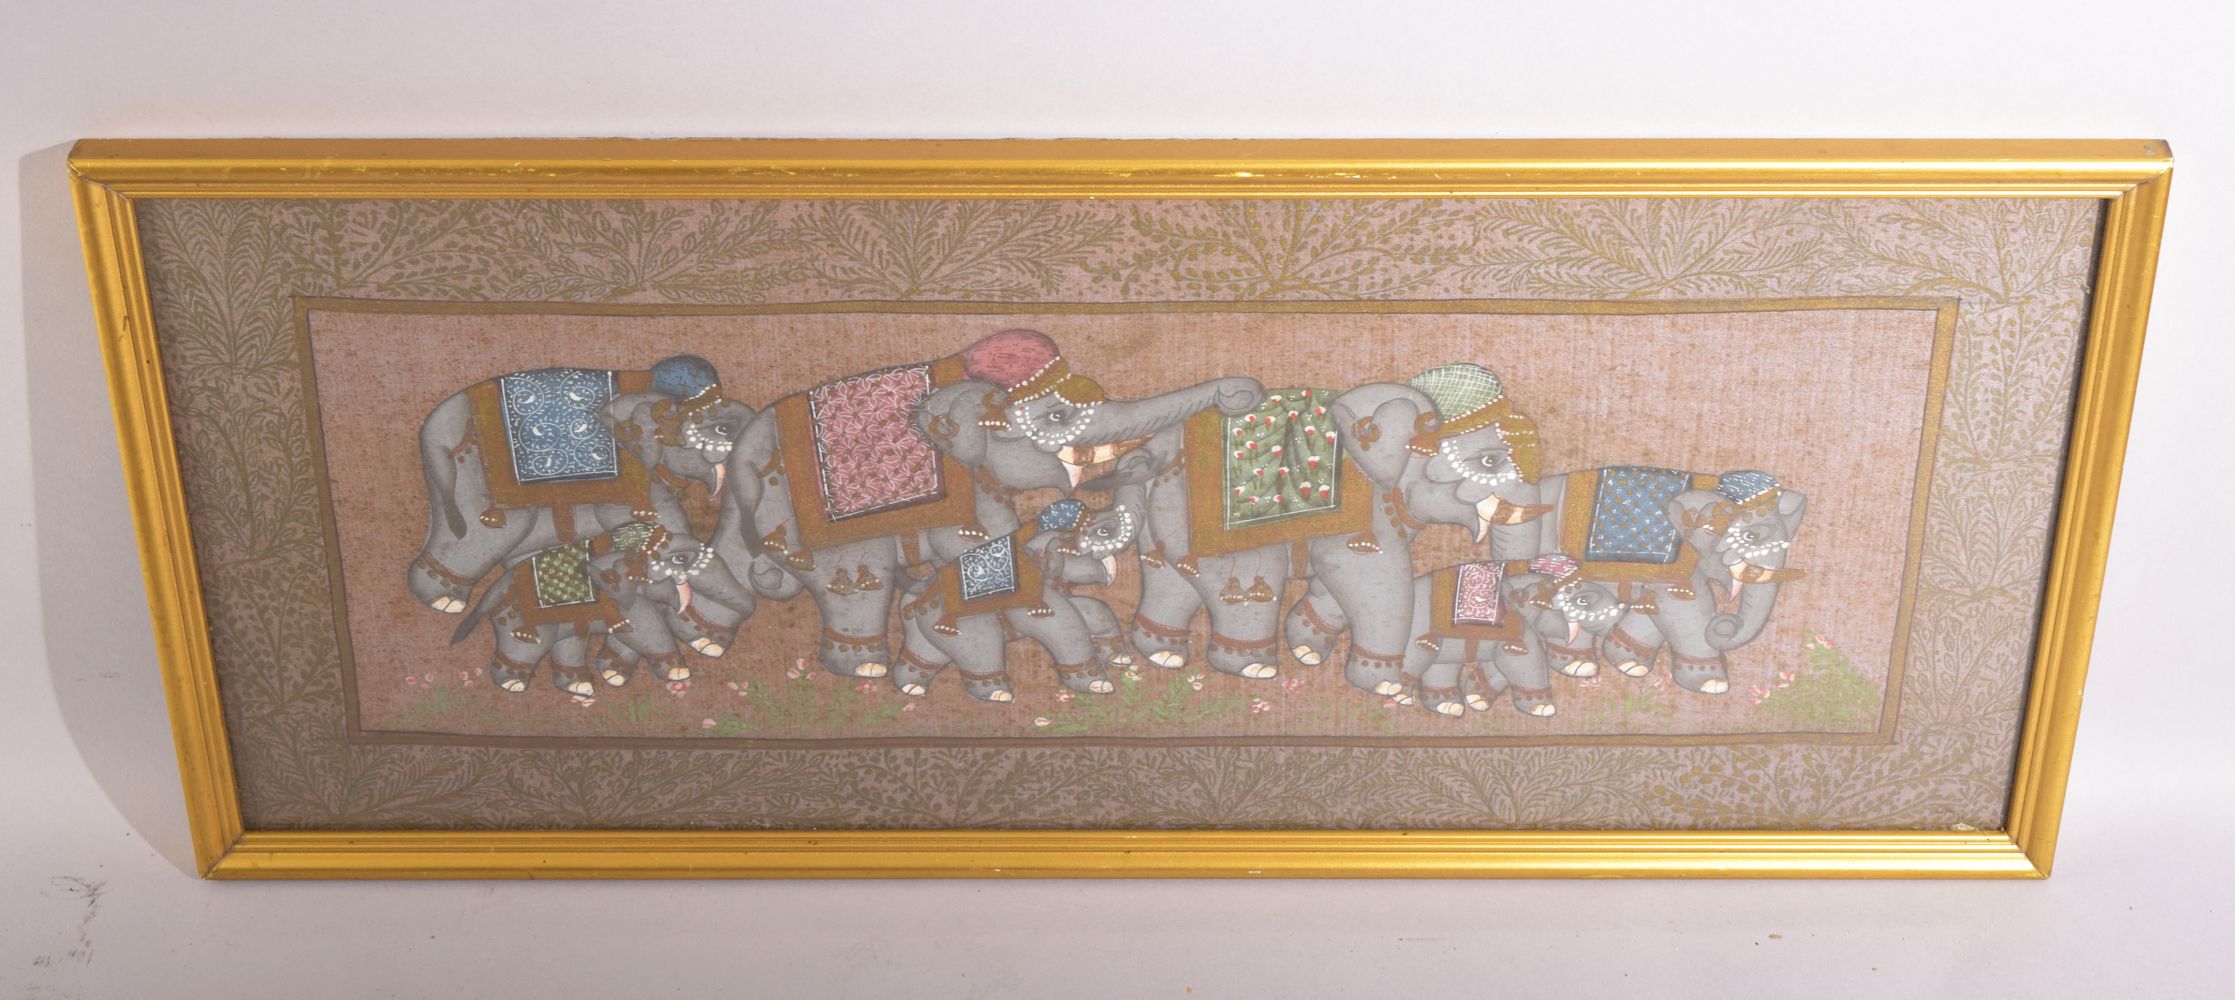 AN INDIAN PAINTING OF ELEPHANTS ON SILK, framed and glazed, 23cm x 53cm.